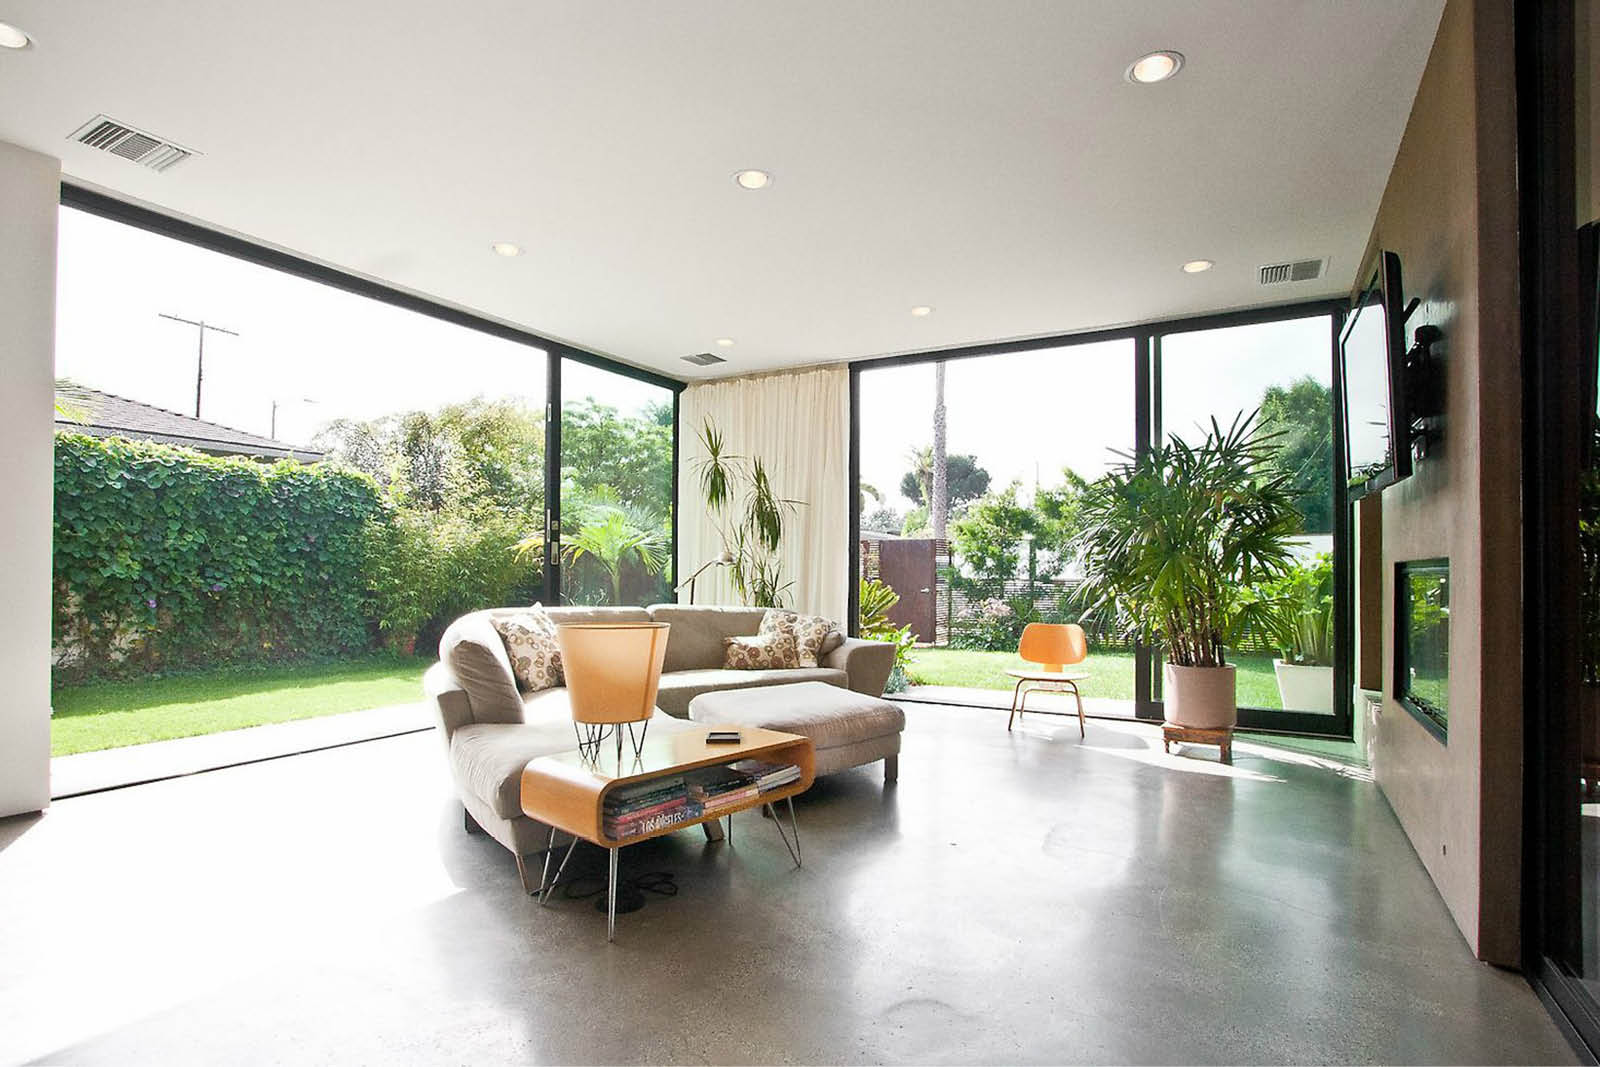 res4-resolution-4-architecture-modern-modular-home-prefab-venice-beach-house-interior-living-room.jpg